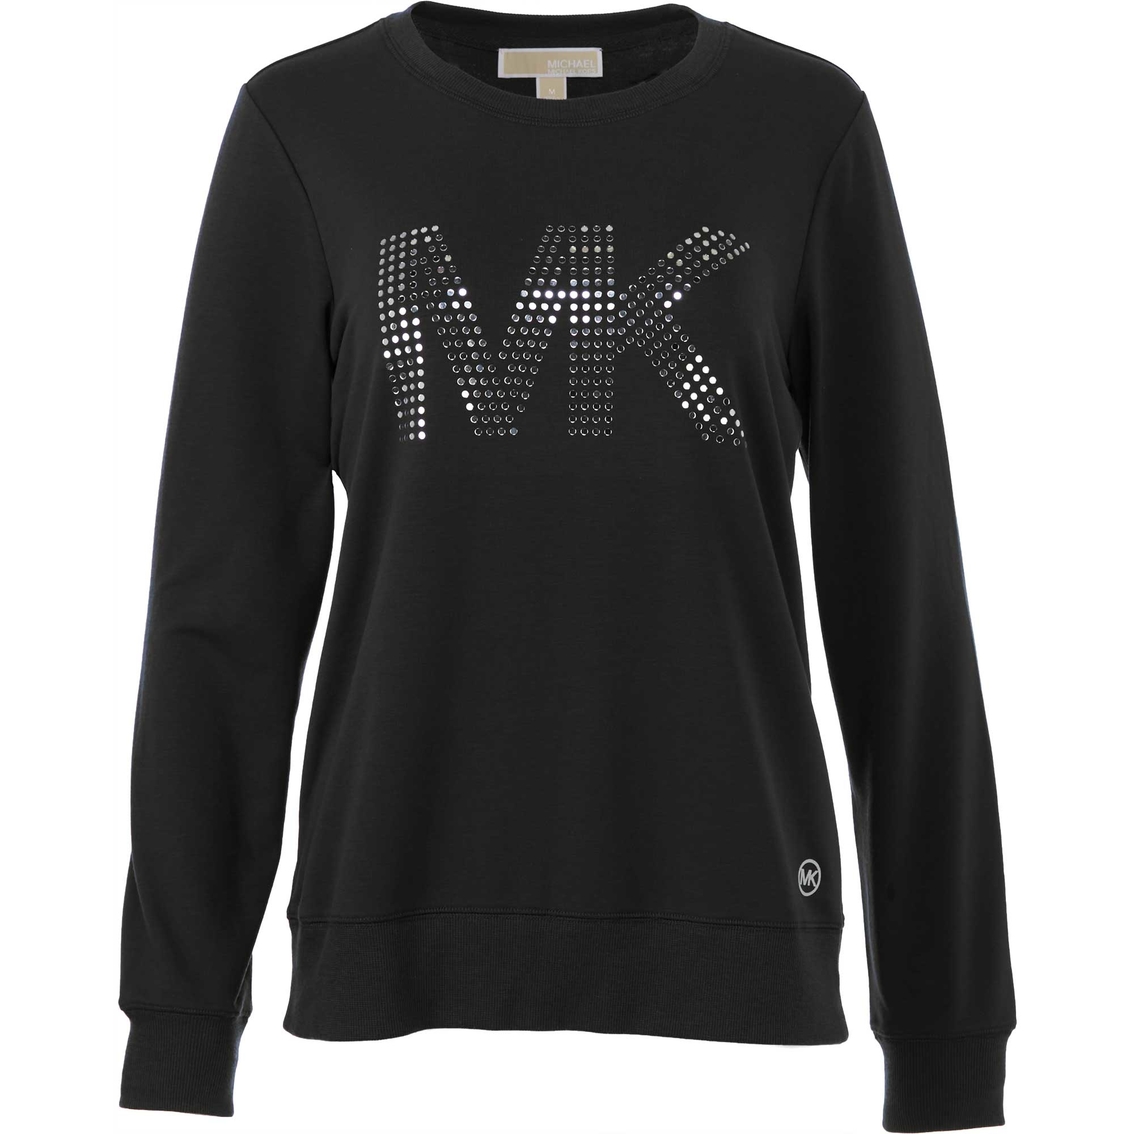 mk sweatshirt